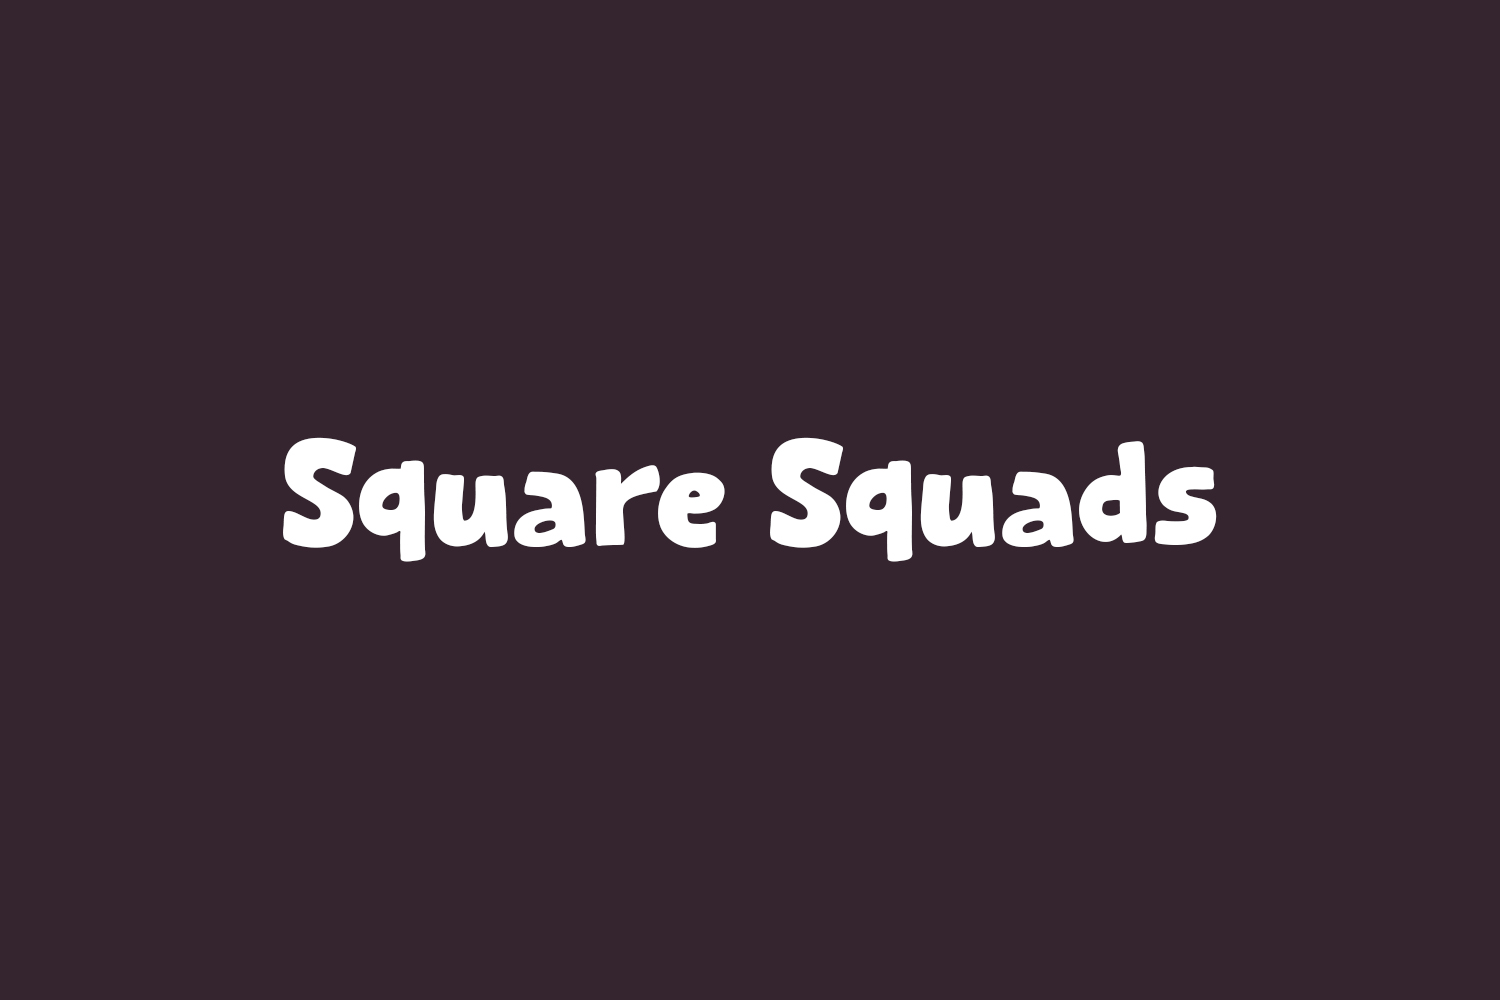 Square Squads Free Font